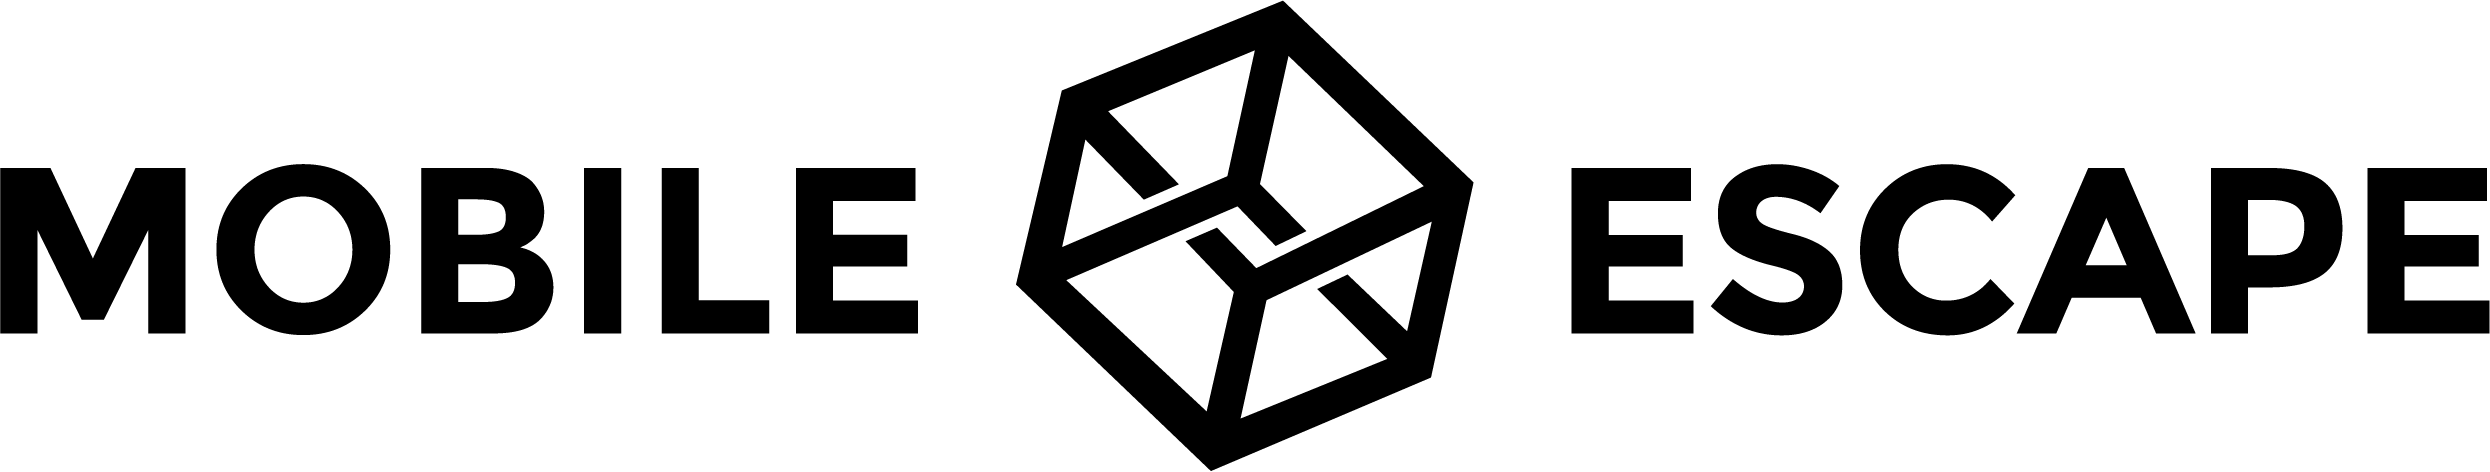 Mobile Escape Logo Horizontal black on clear (1)